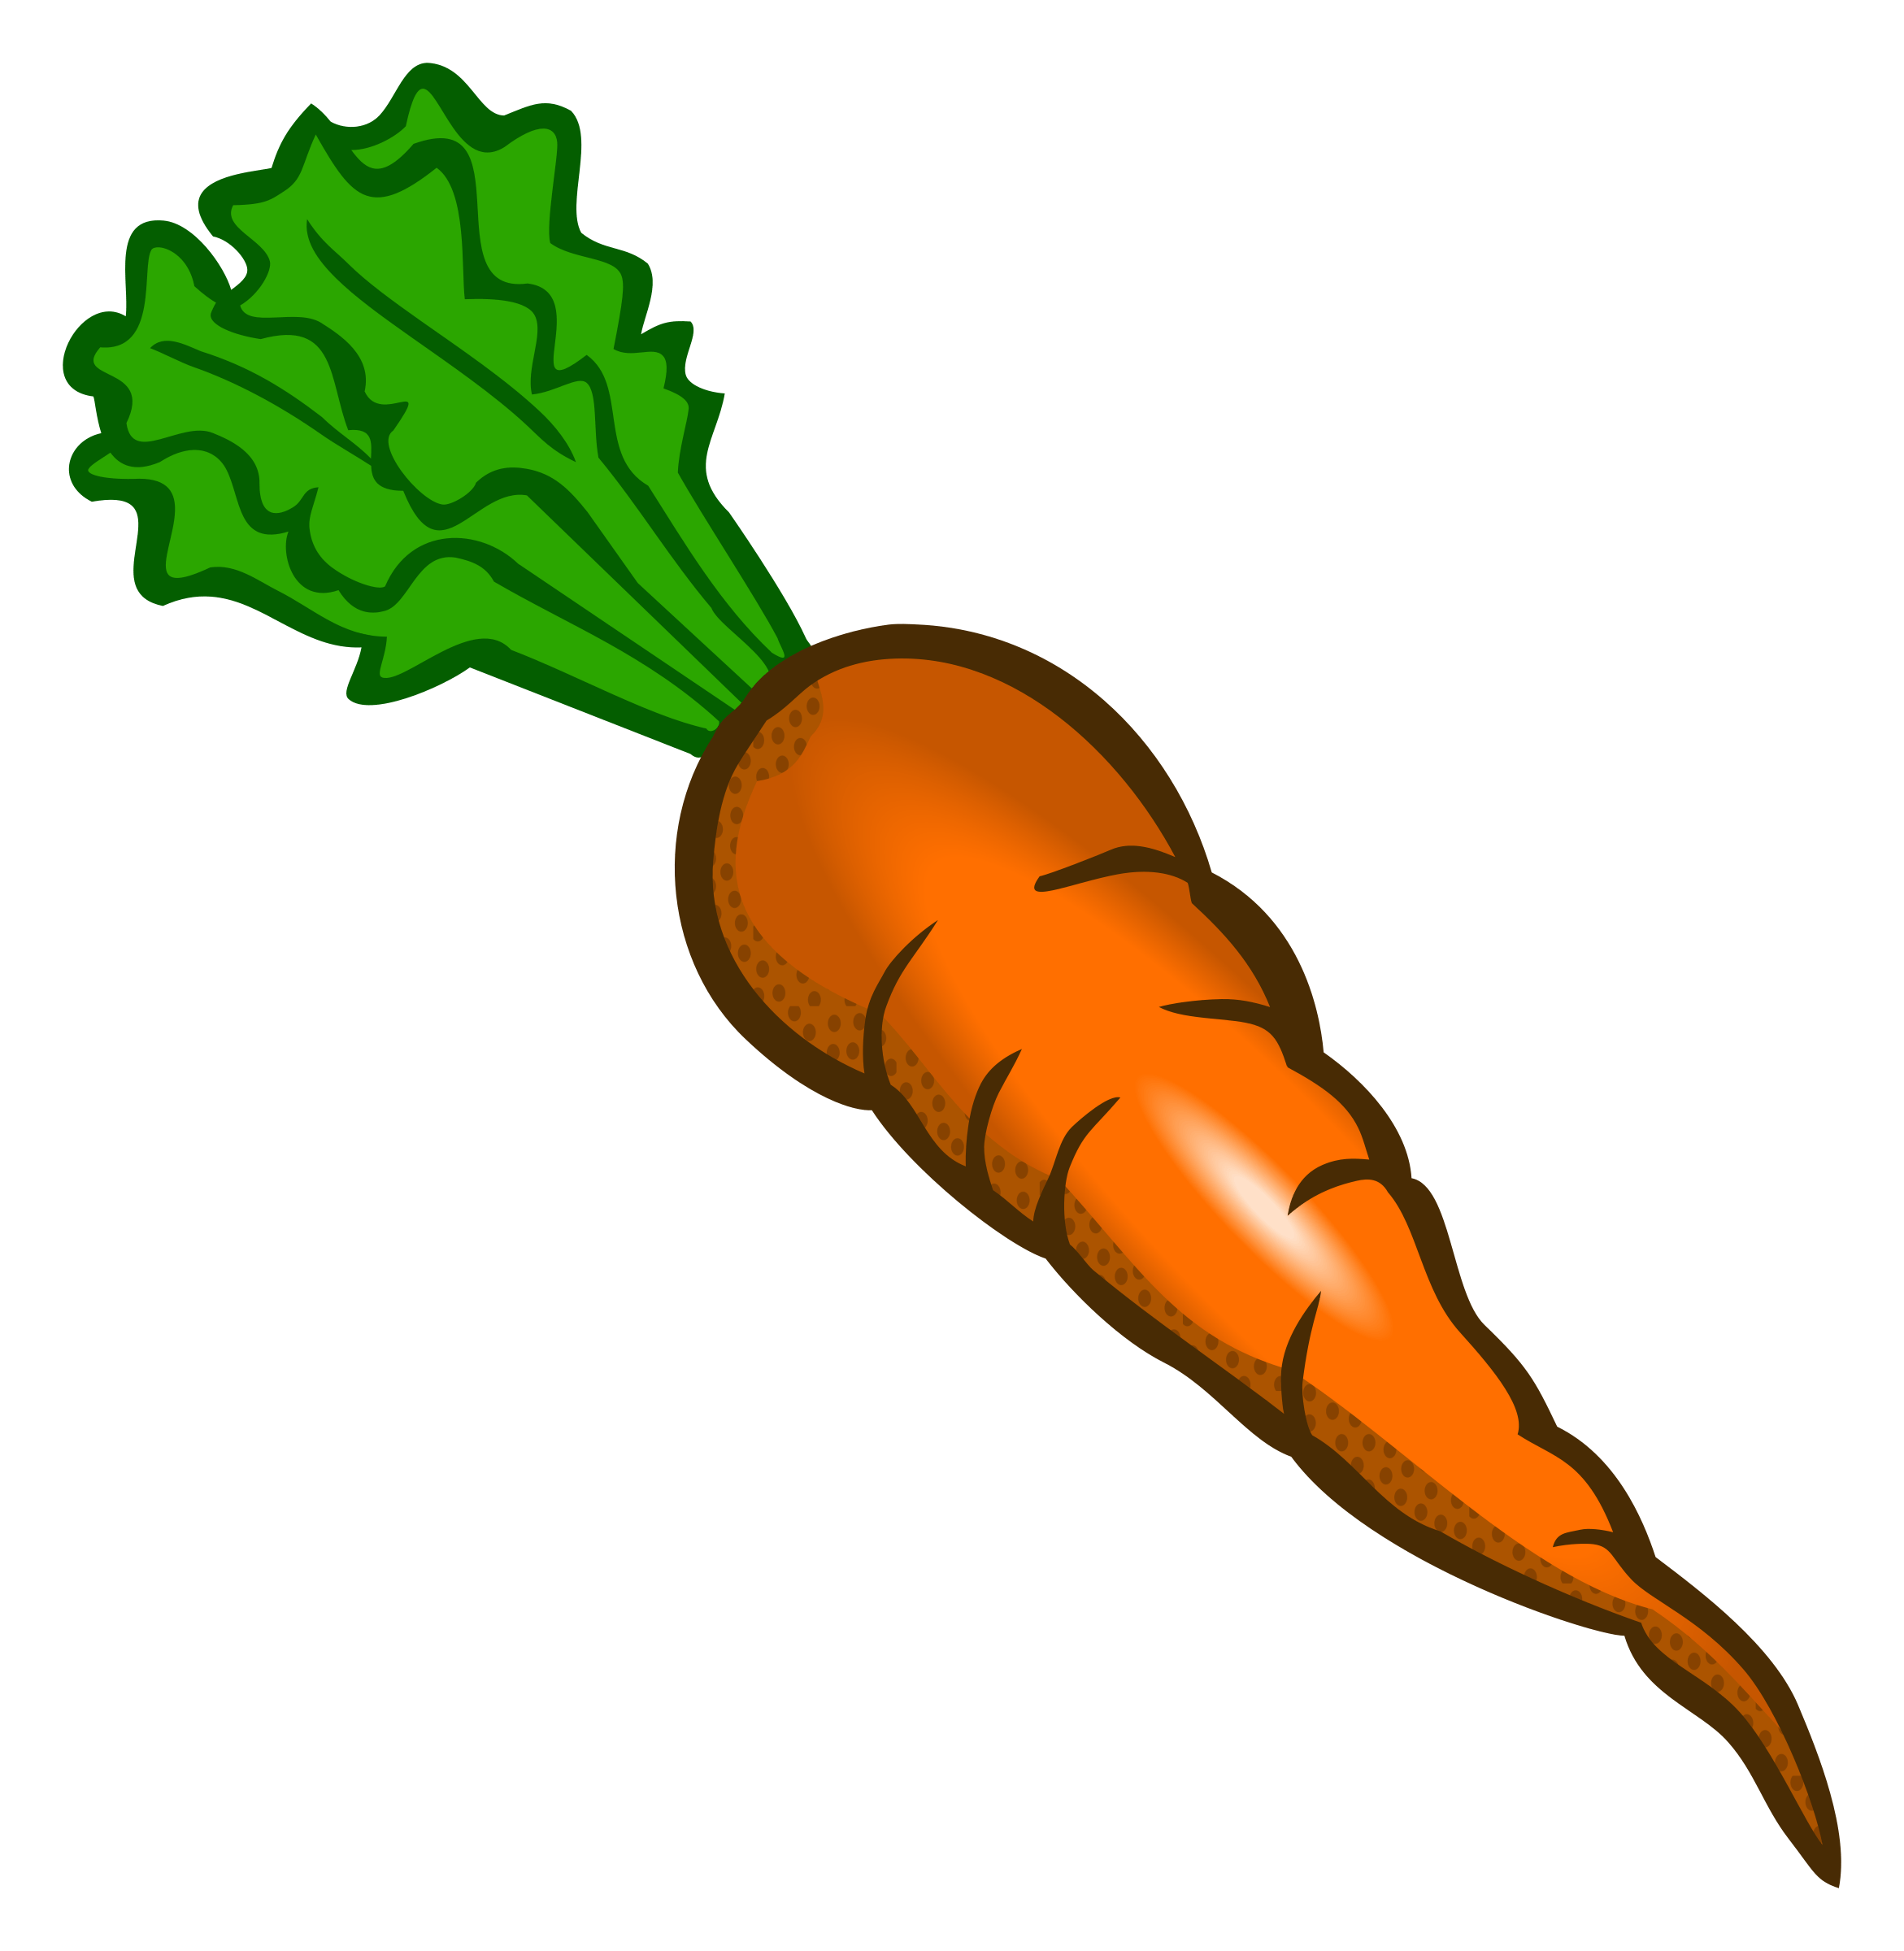 Orange carrot cliparts png. Carrots clipart single